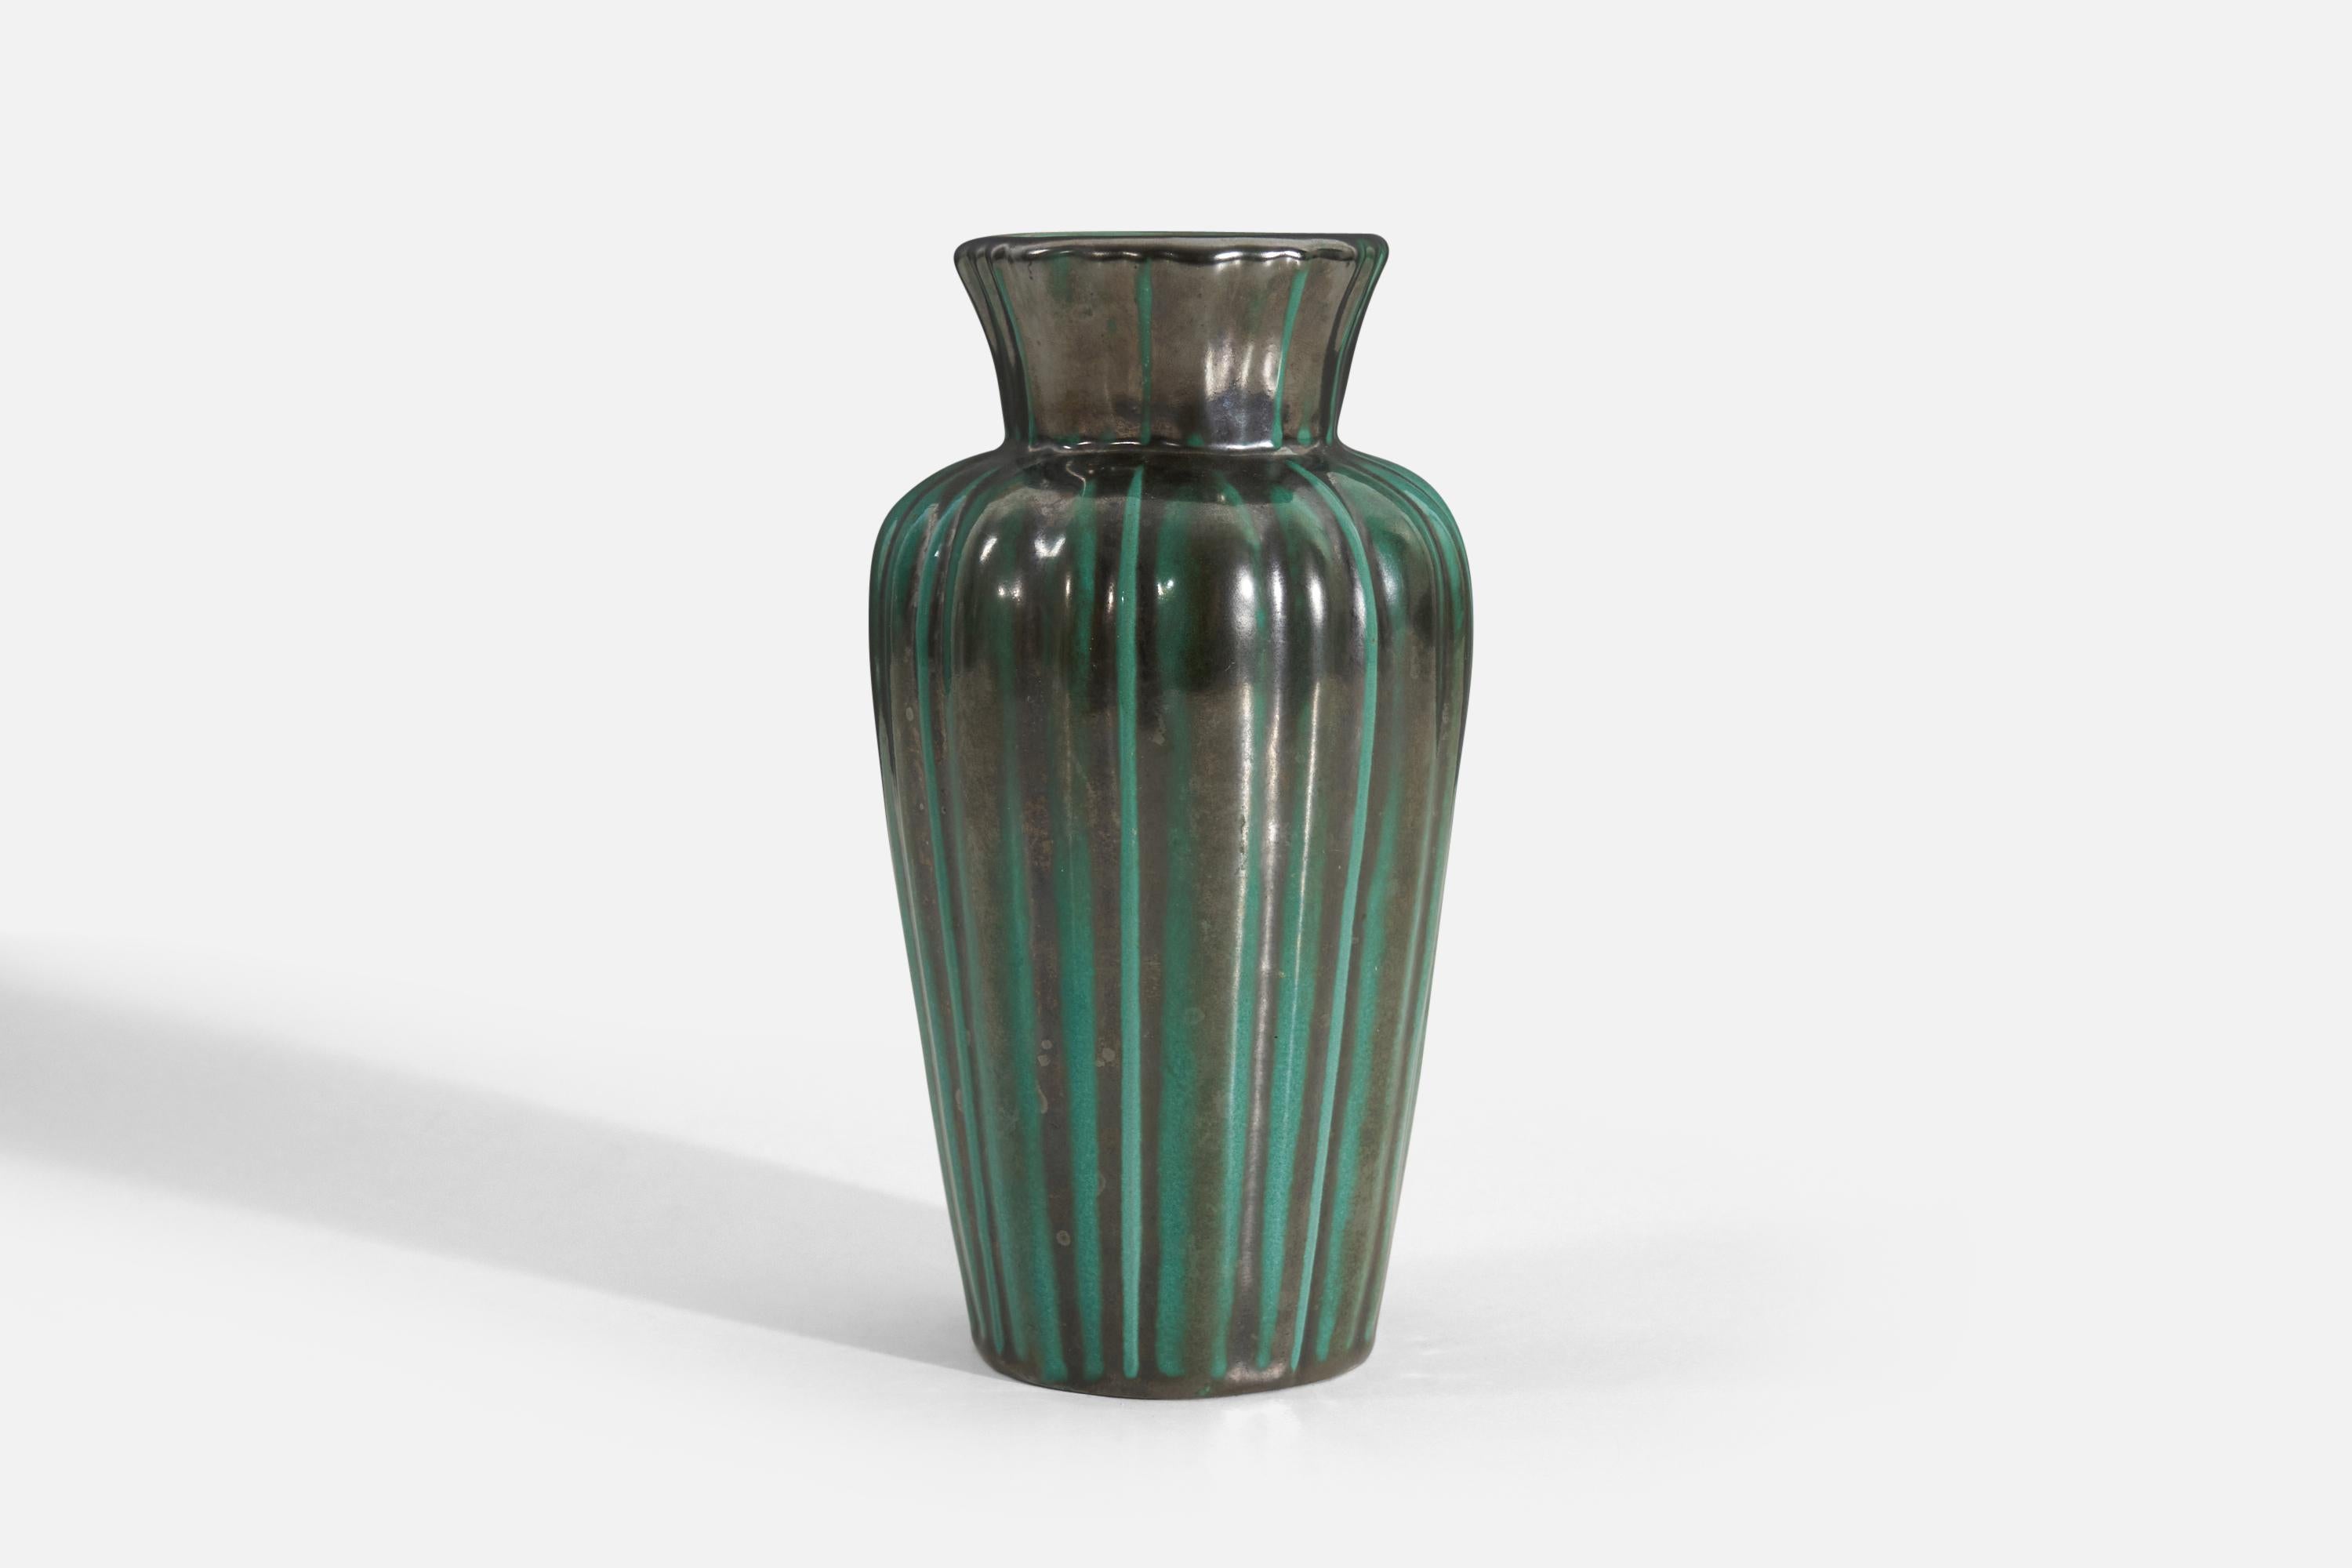 A green-glazed earthenware vase produced by Upsala-Ekeby, Sweden, 1940s.

